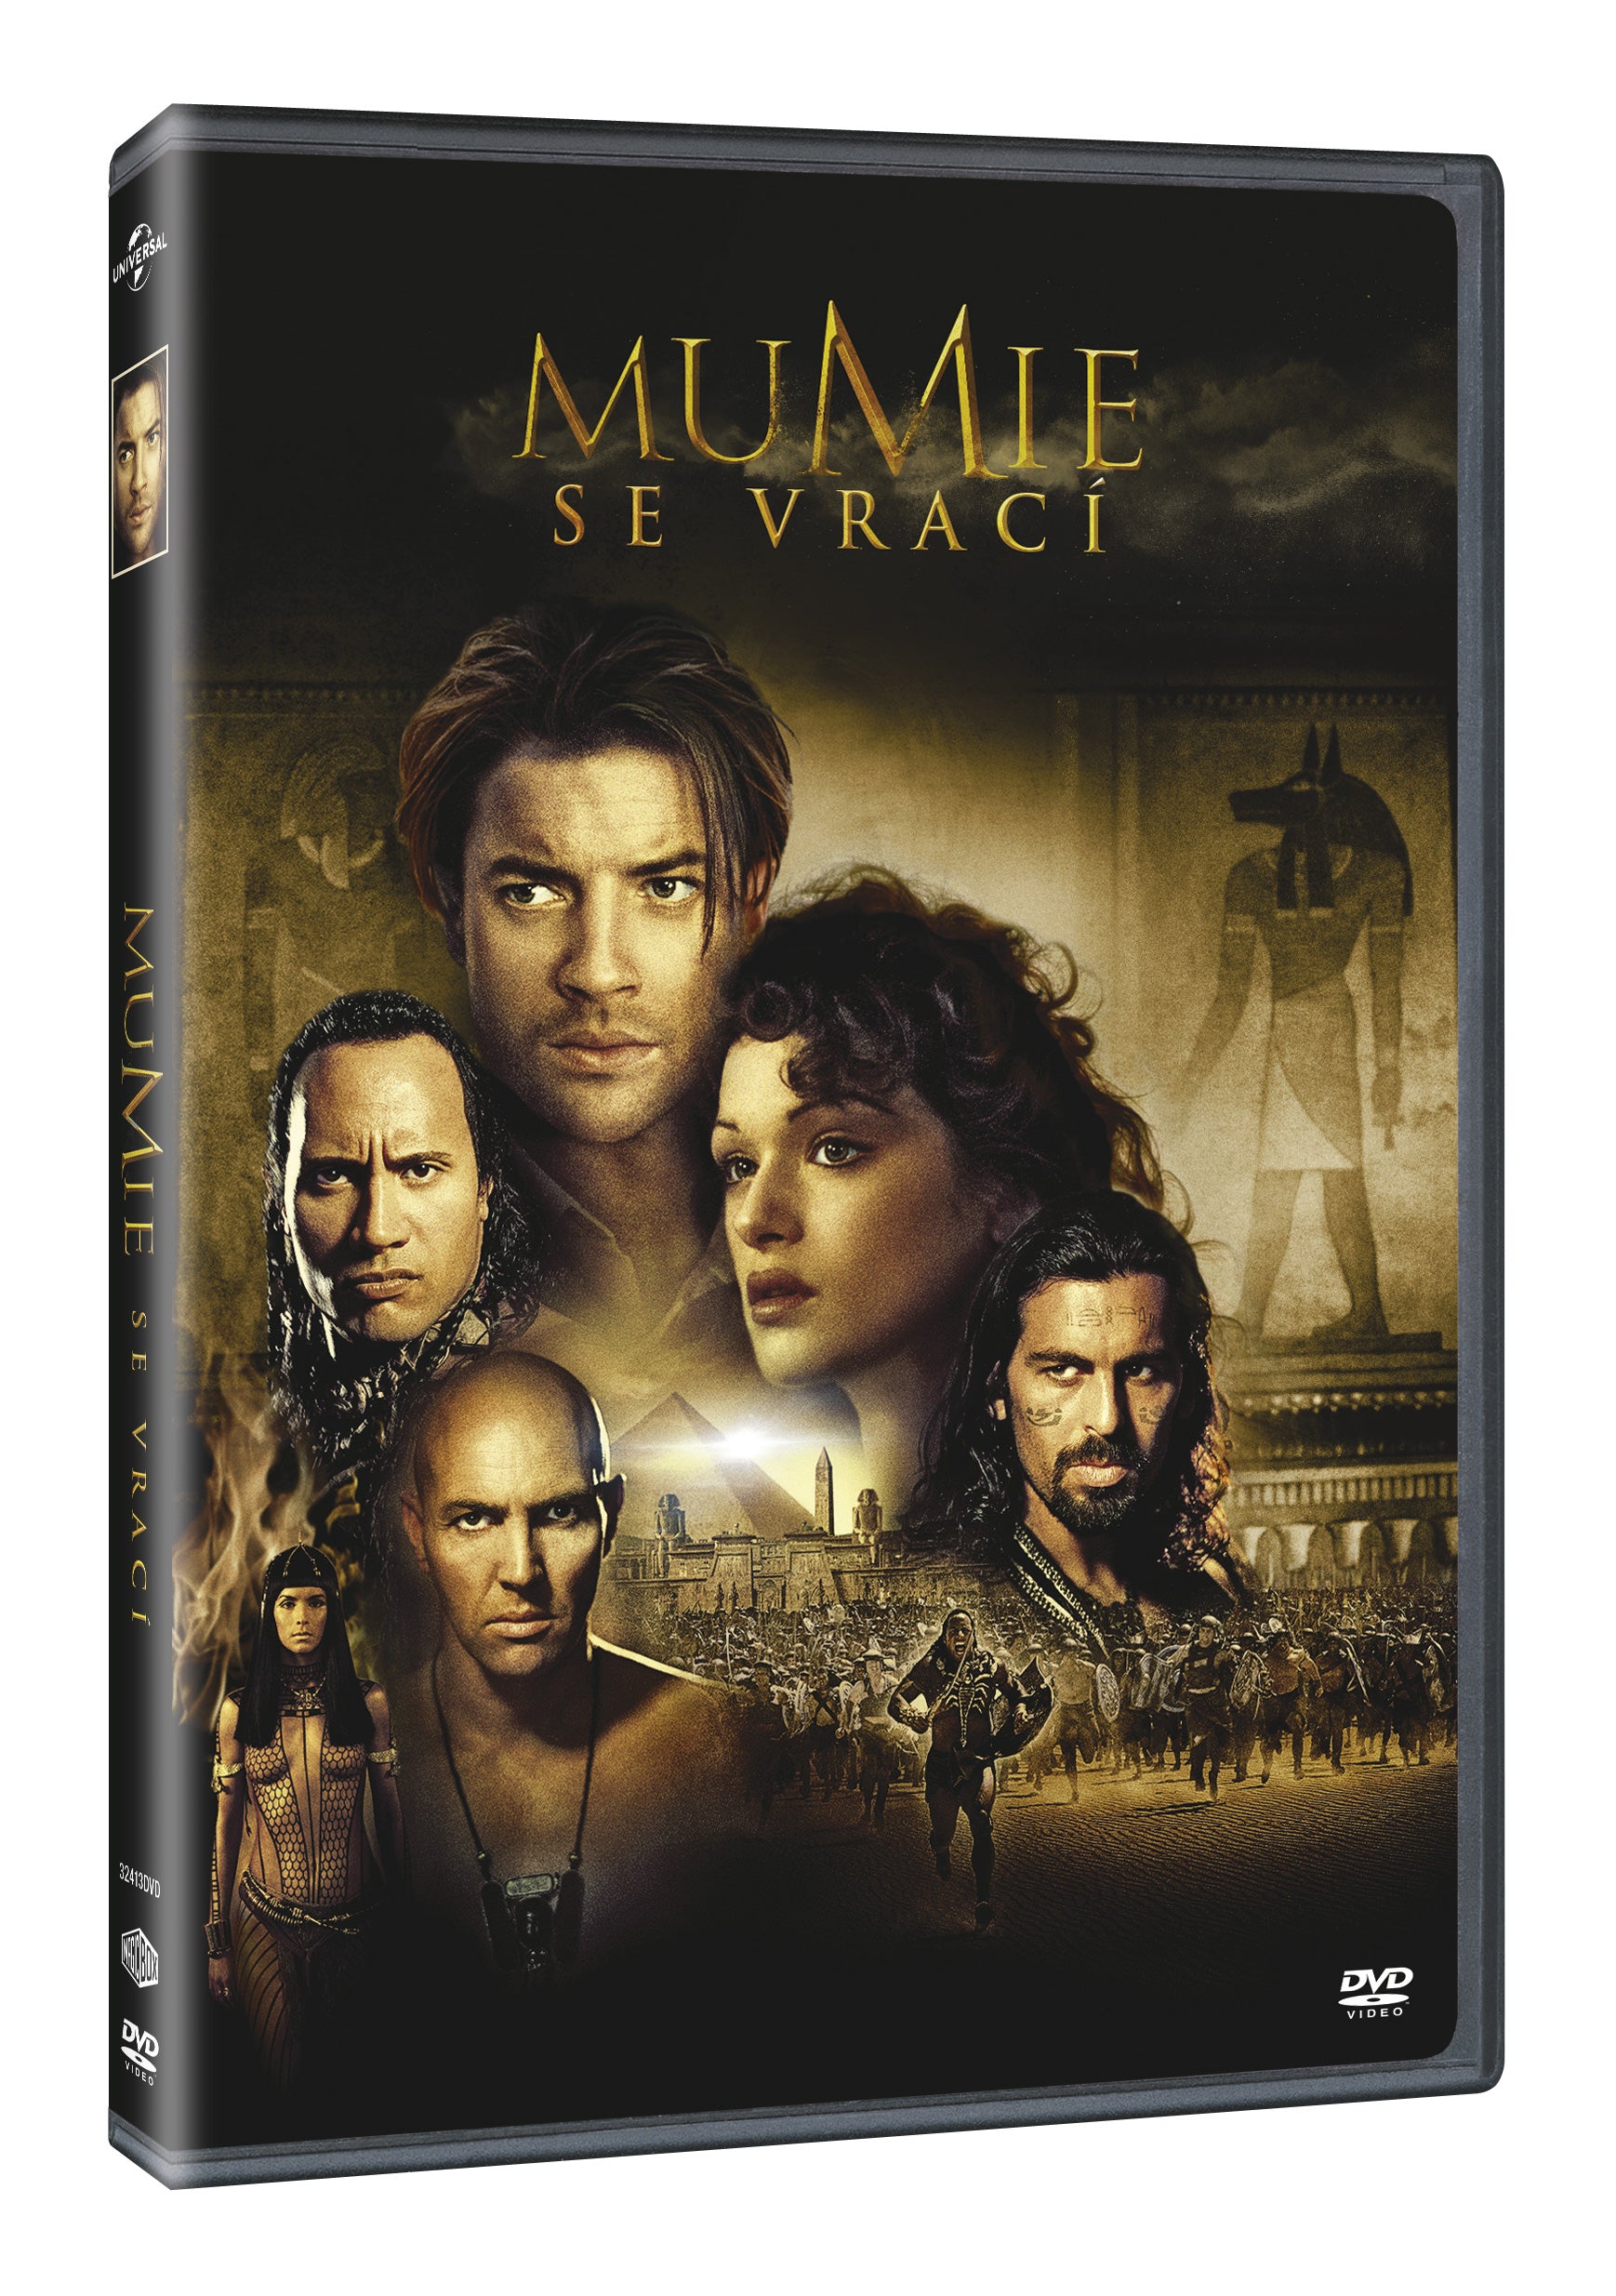 Mumie se vraci DVD / The Mummy Returns